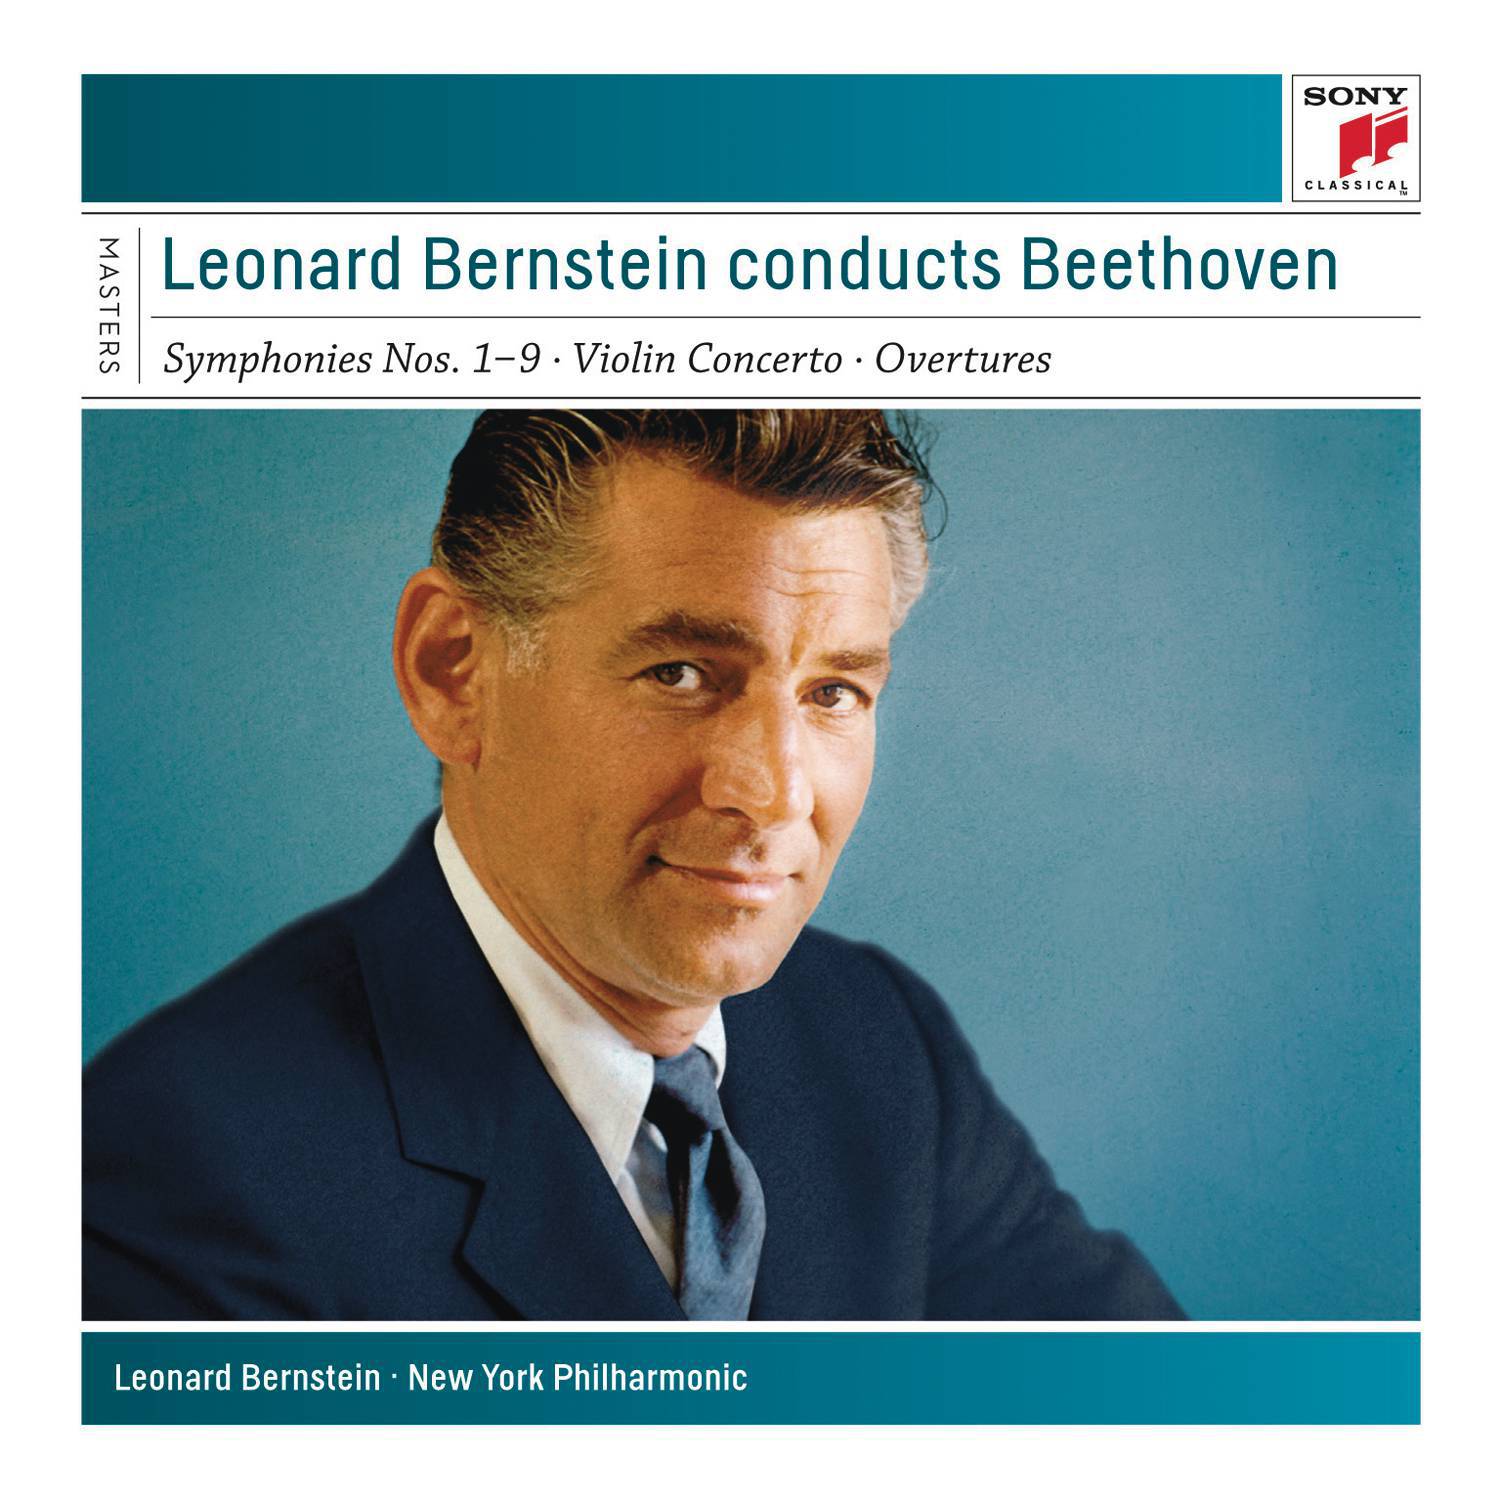 Leonard Bernstein - Beethoven Symphonies Nos. 1-9, Overtures, Violin Concerto - Sony Classical Maste专辑